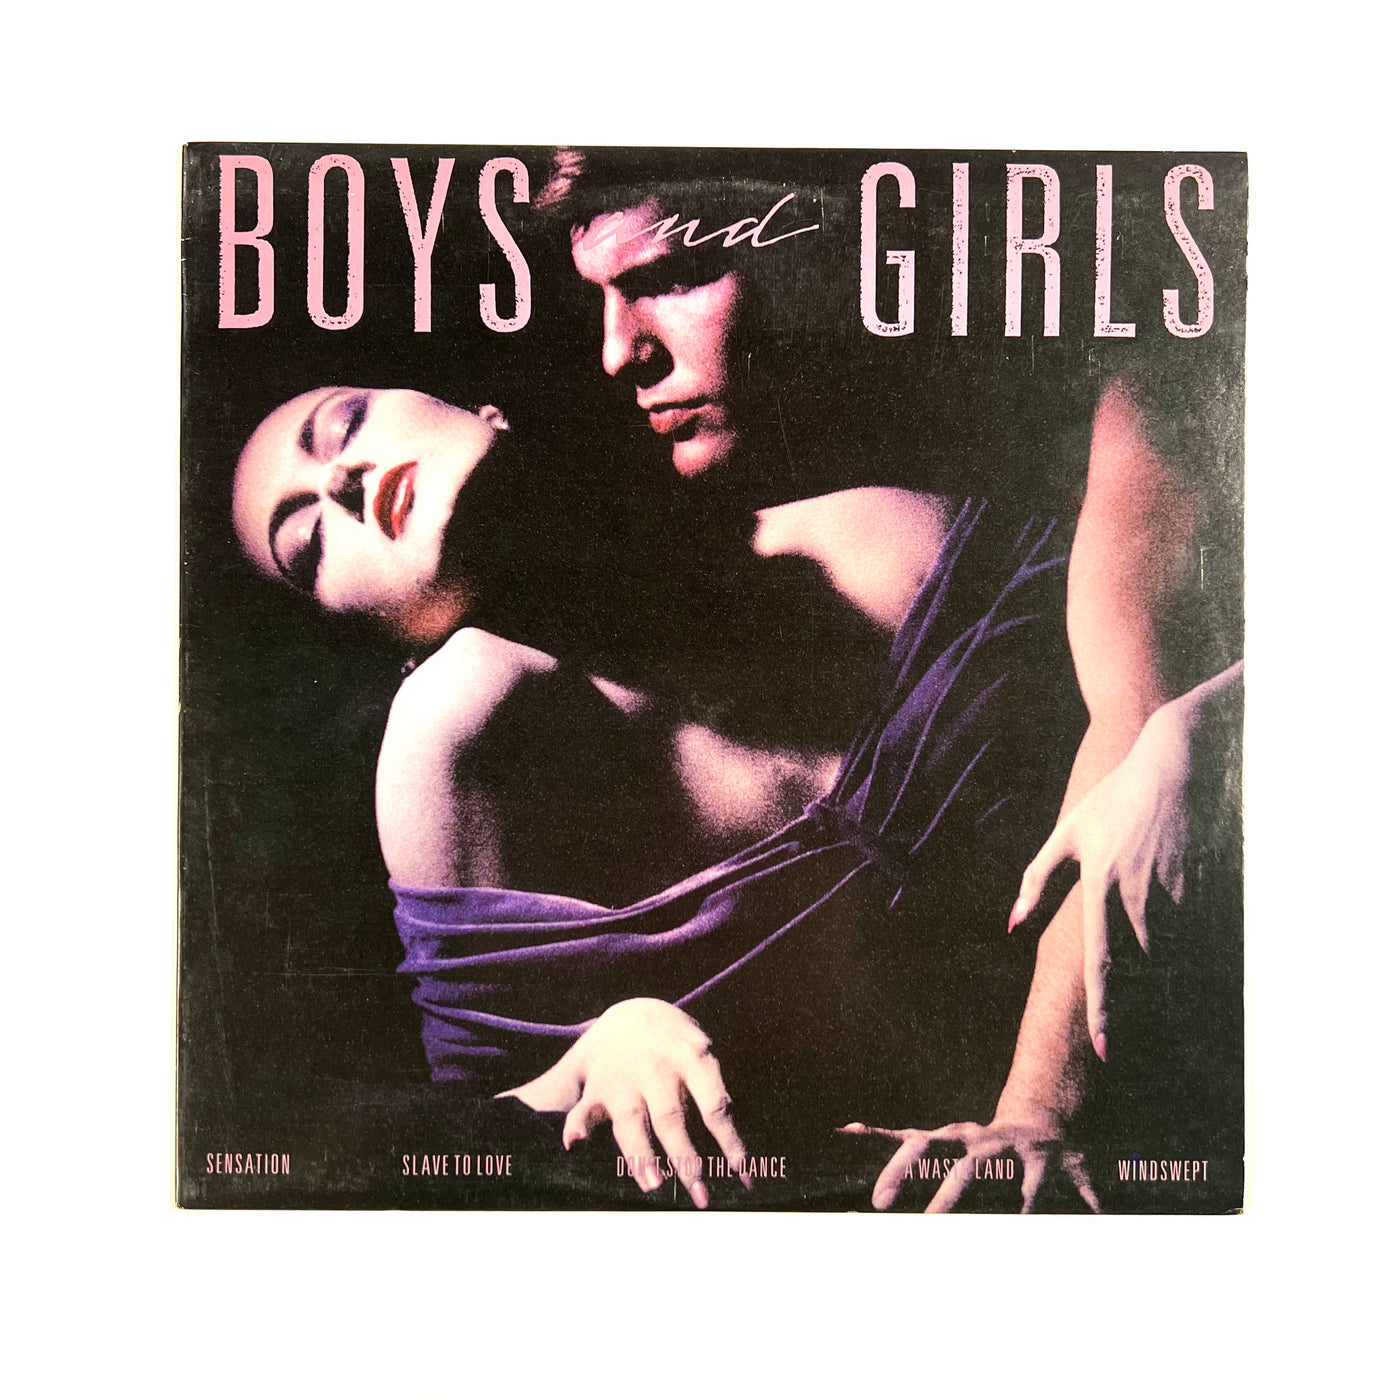 Bryan Ferry - Boys And Girls